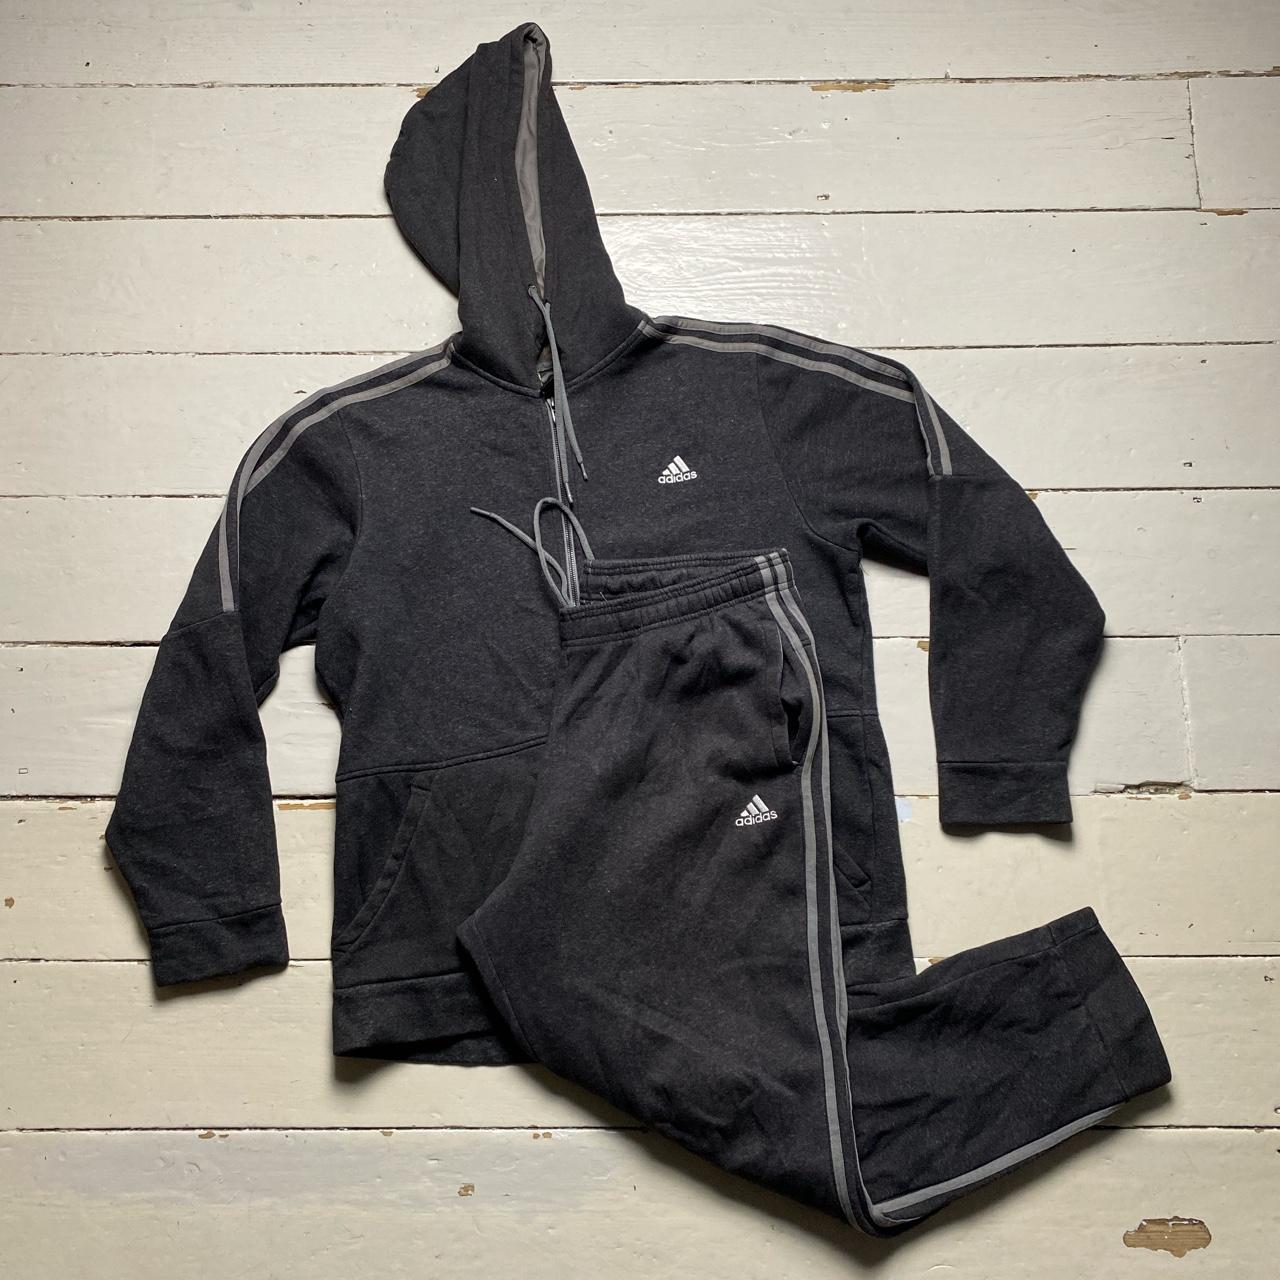 Adidas Grey and Black Tracksuit